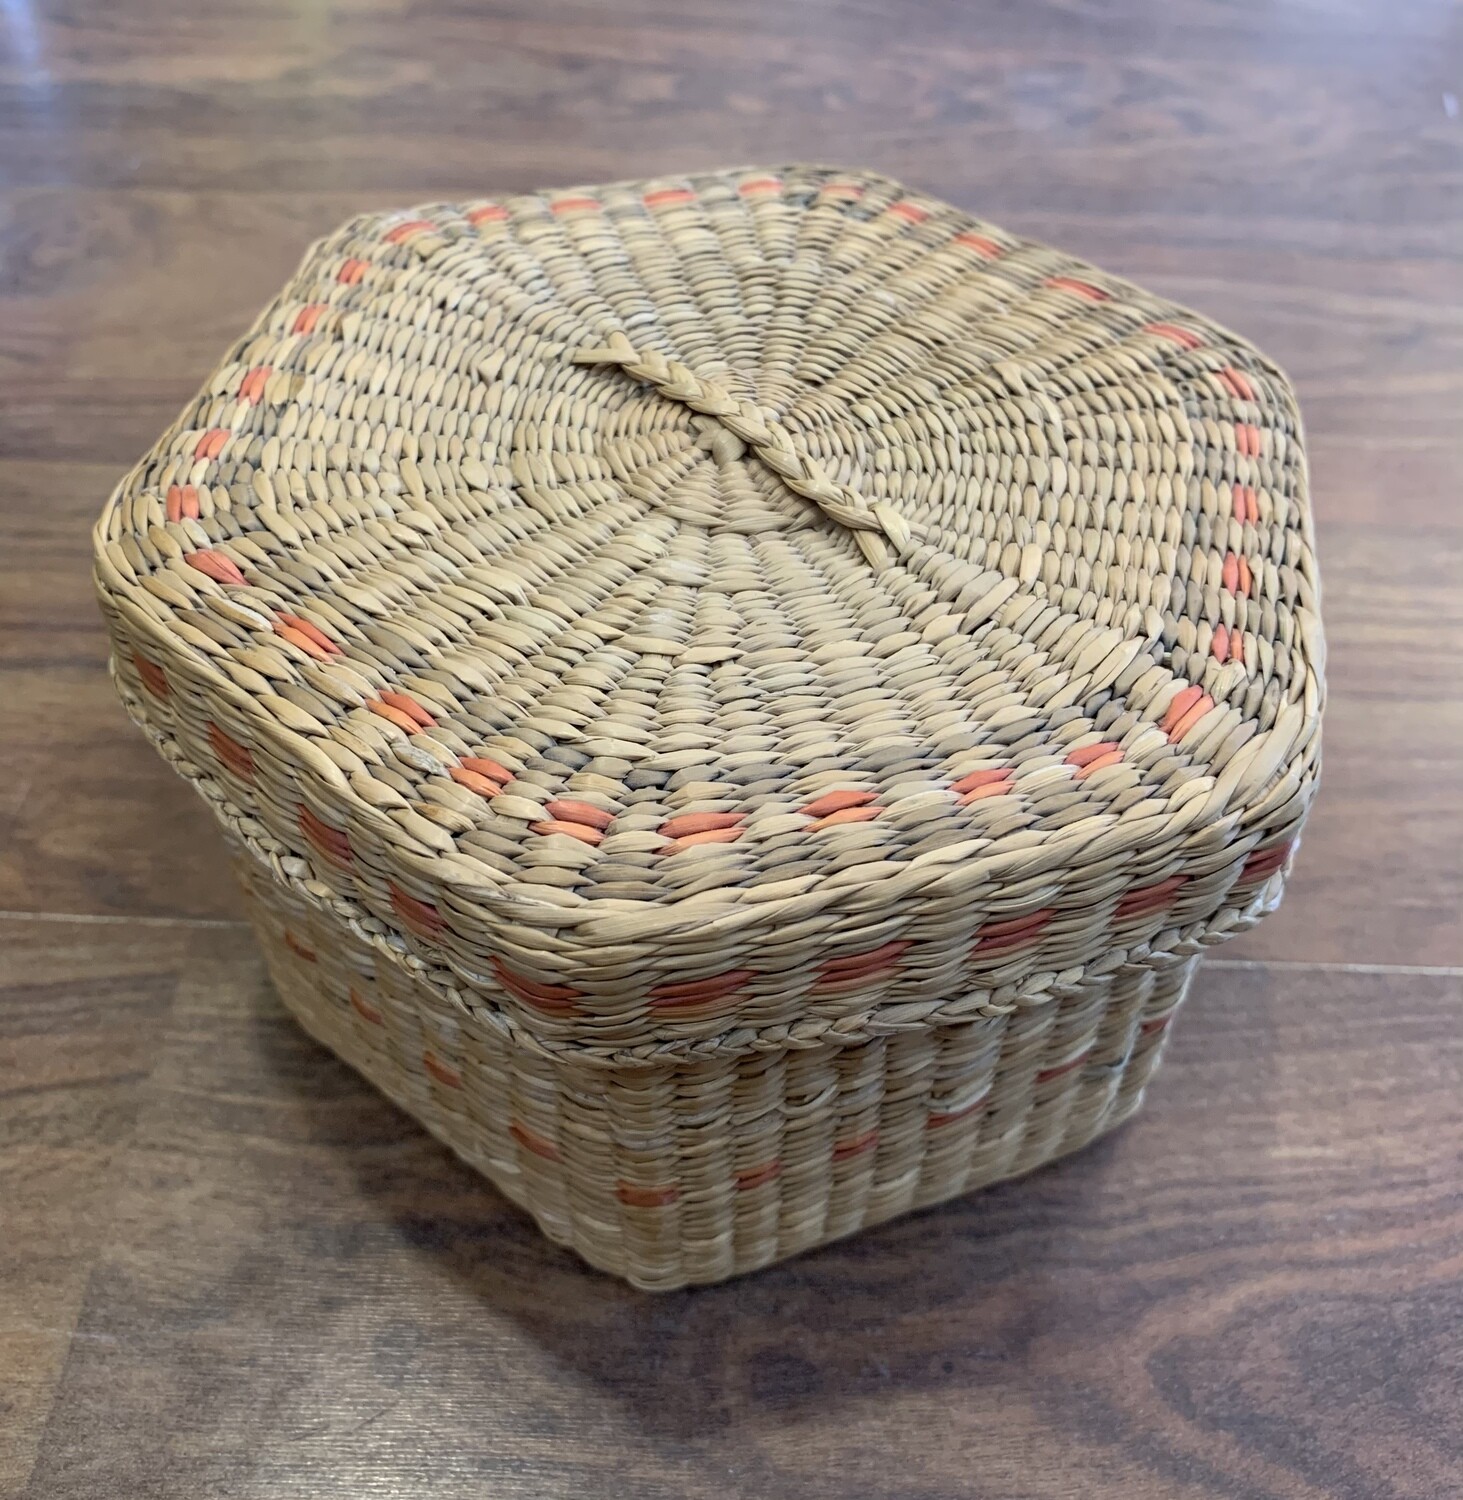 6” Hexagonal Woven Basket